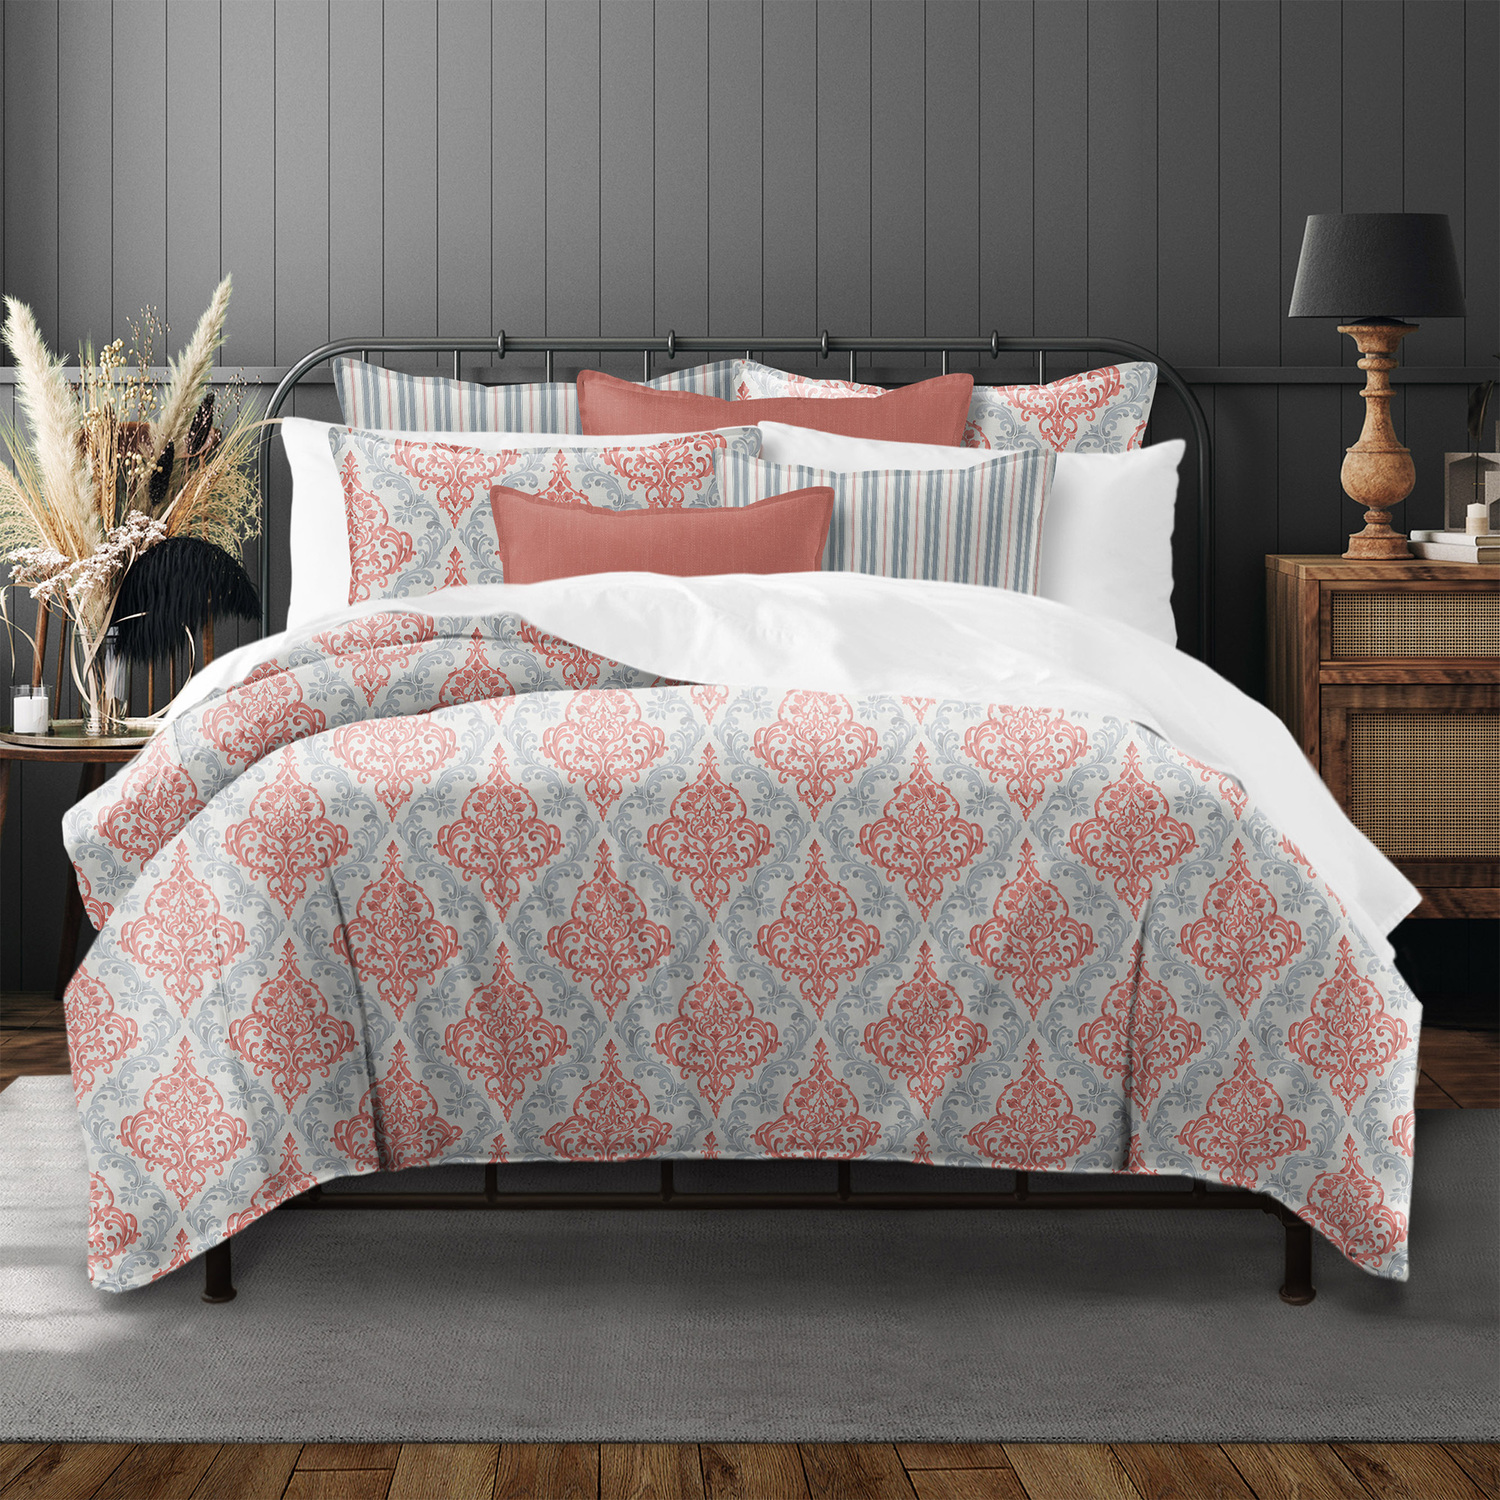 Bedding Super Store.com - Duvet Covers, Bedding Sets, Comforter